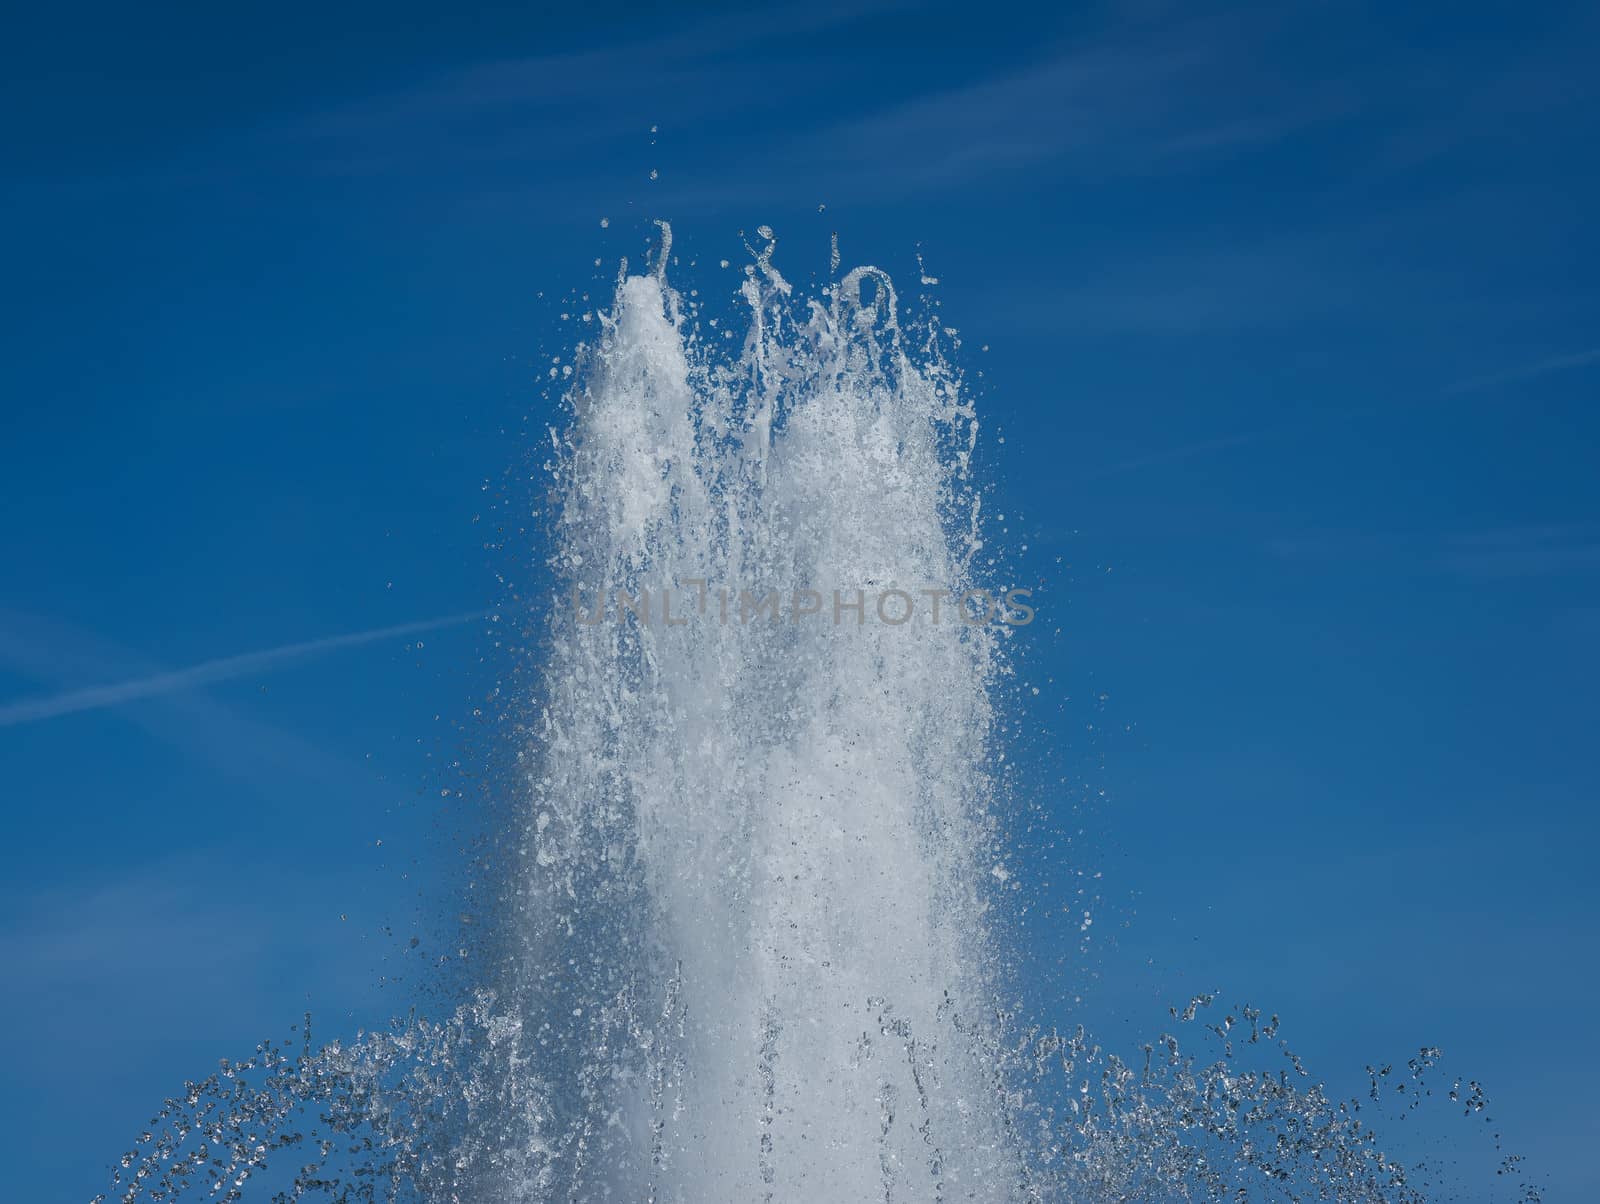 Water splash in fountain on blue sky background